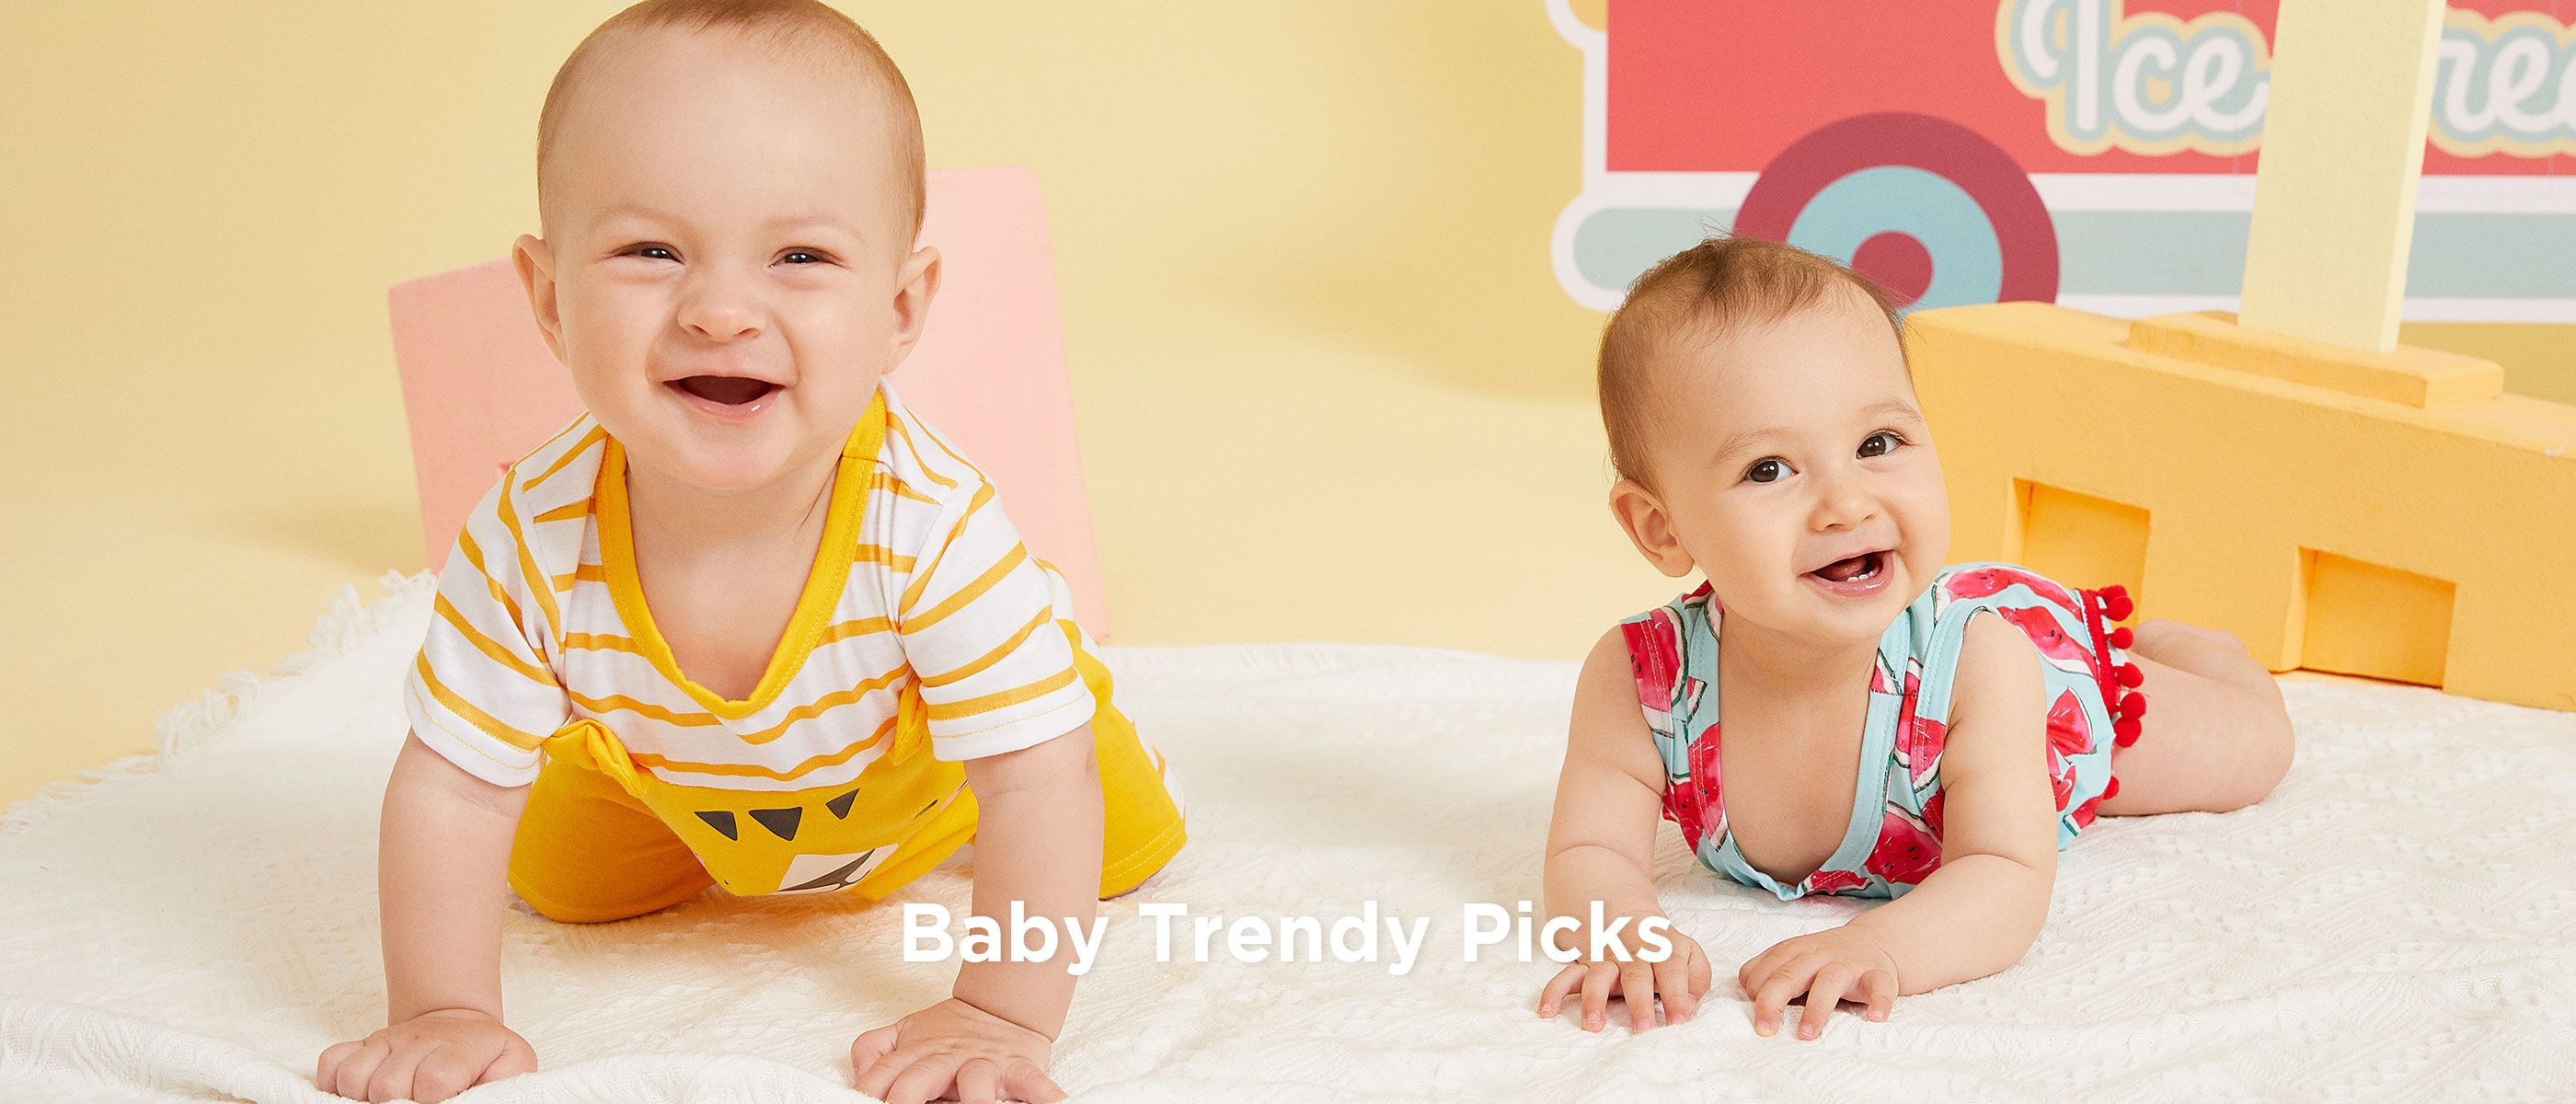 Baby Trendy Picks